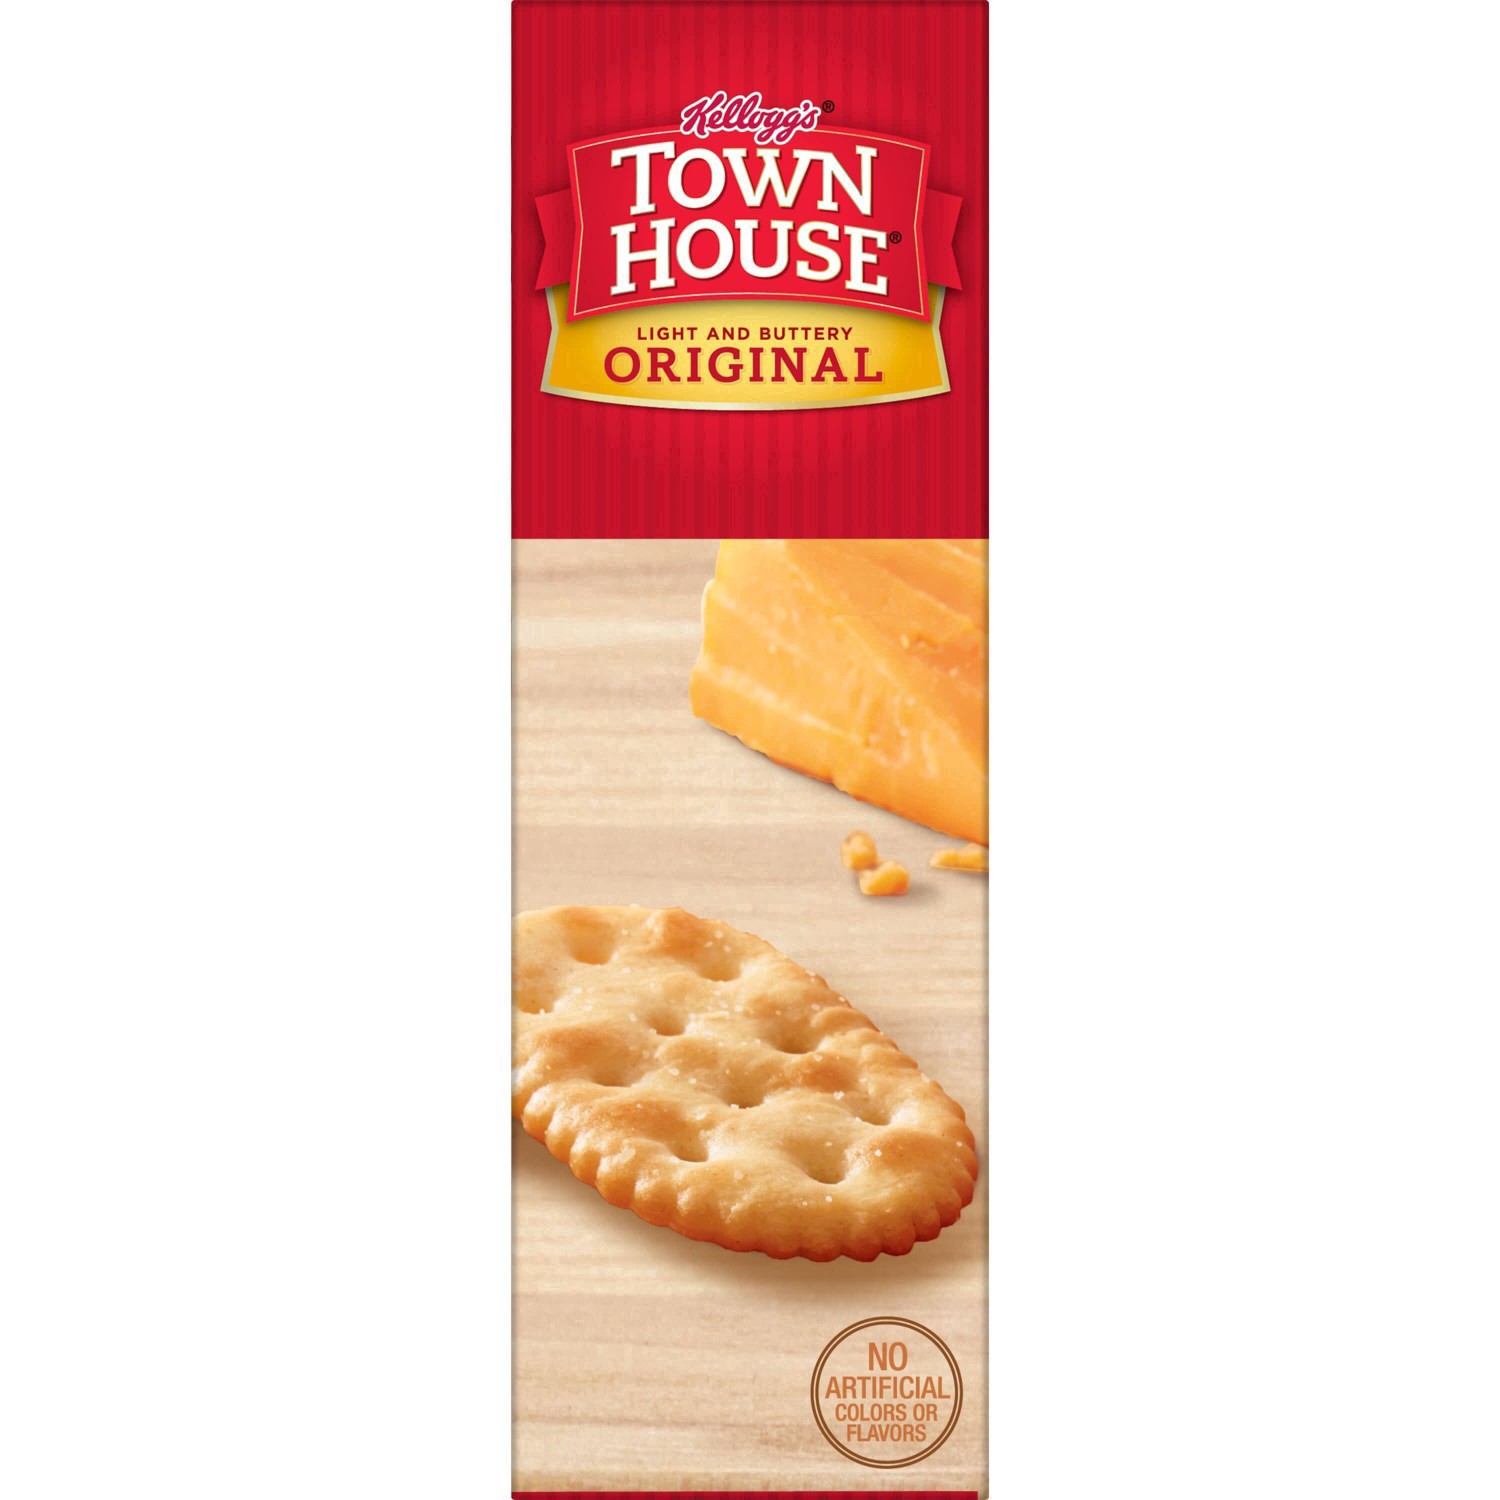 slide 90 of 101, Town House Kellogg's Town House Original Snack Crackers - 13.8oz, 13.8 oz